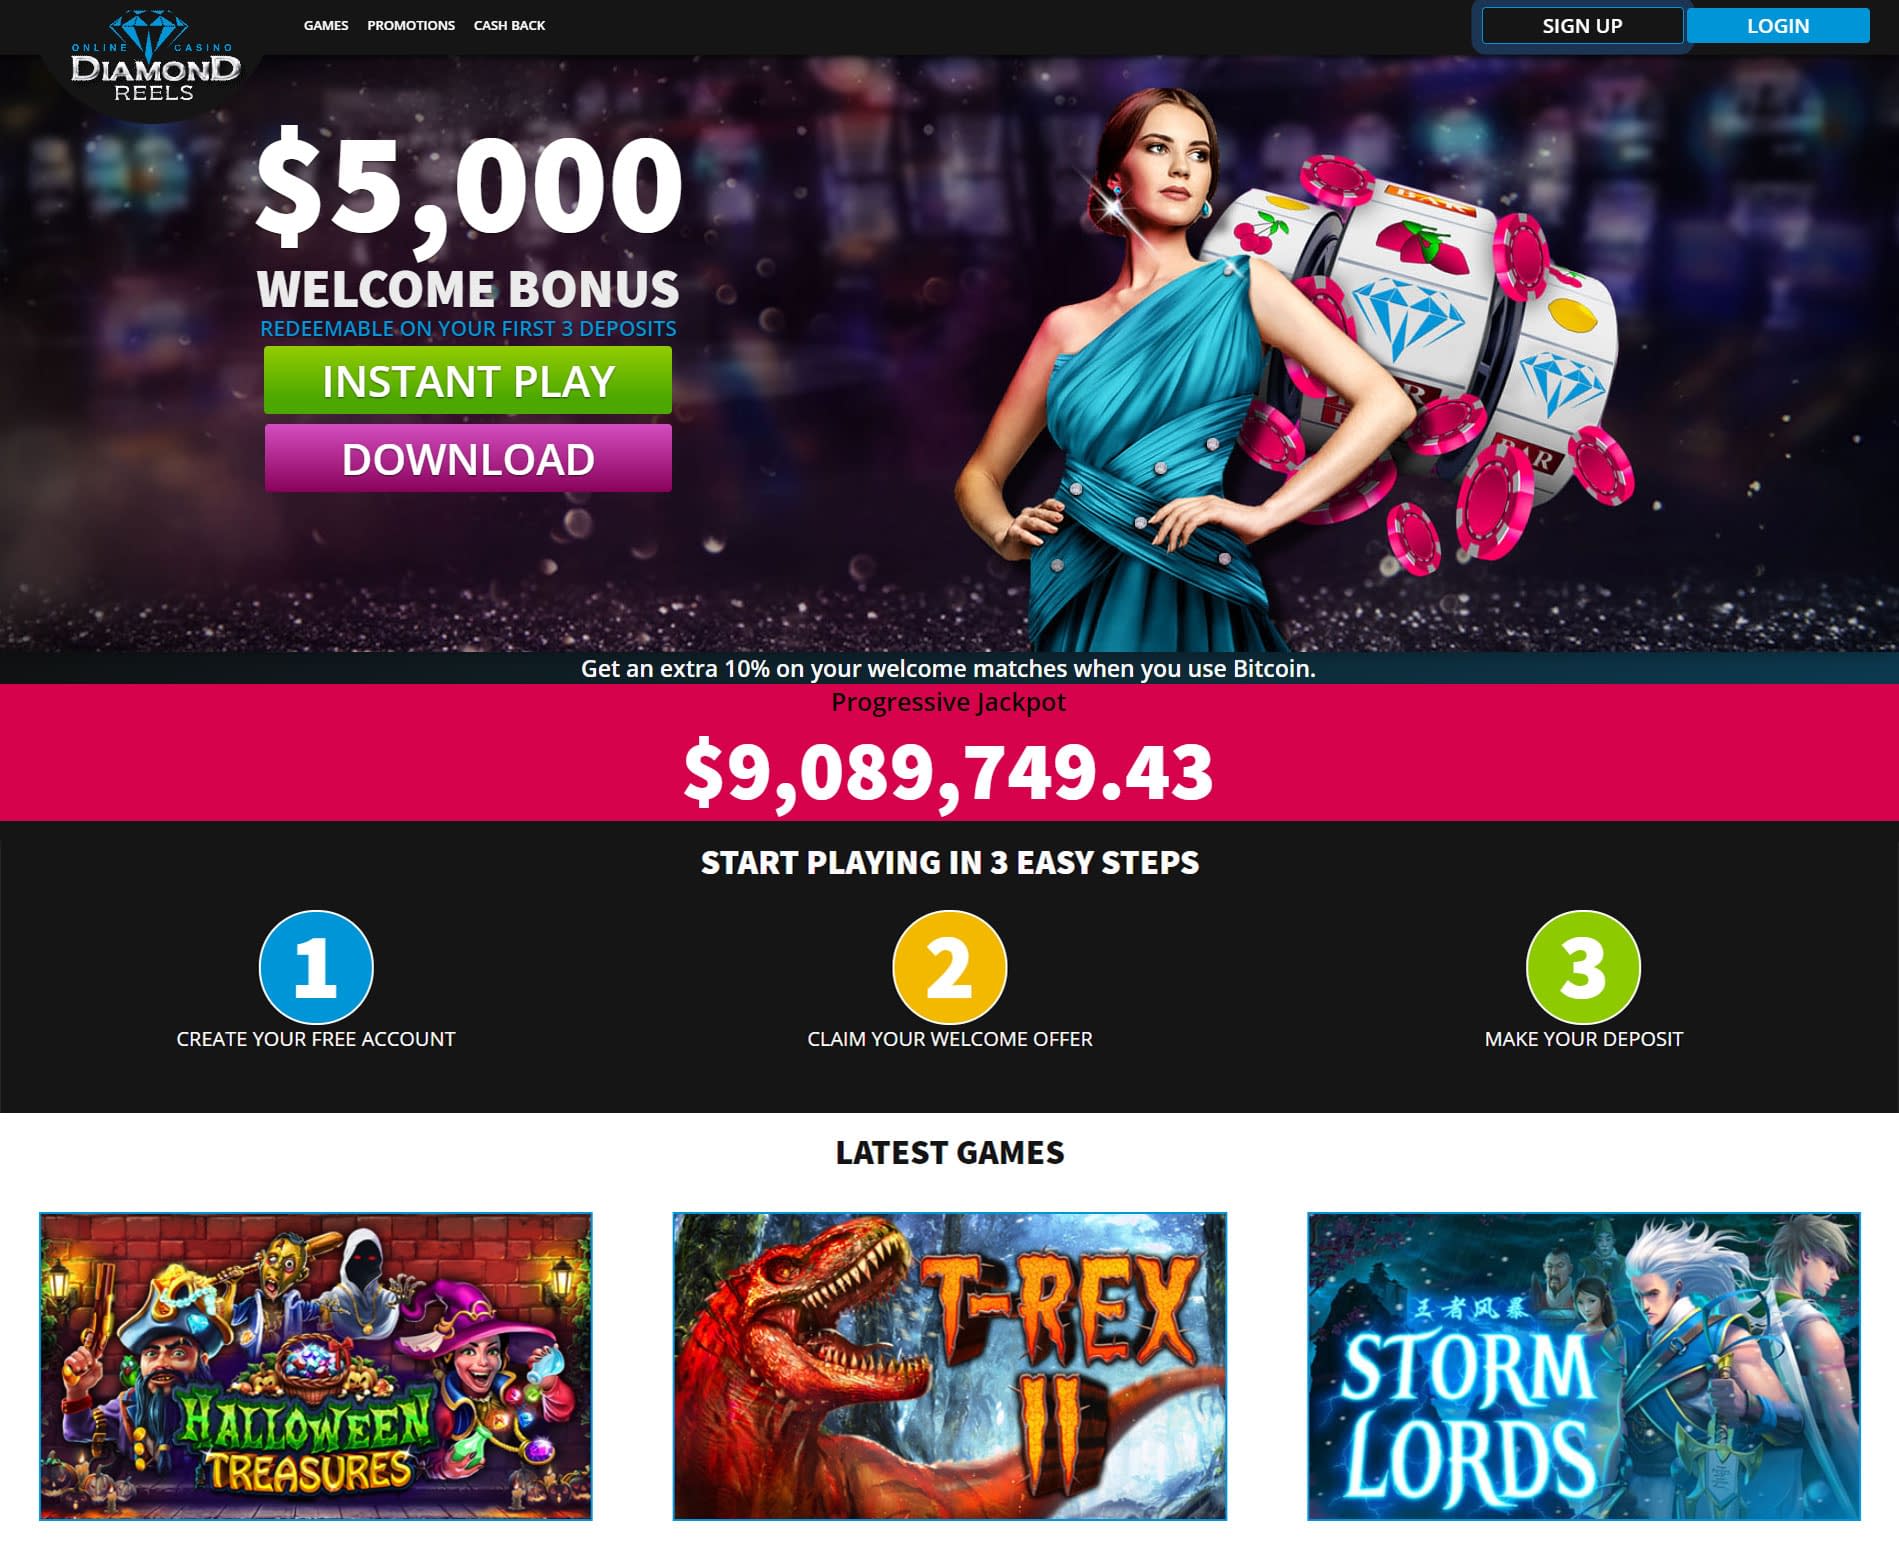 download the last version for iphoneResorts Online Casino